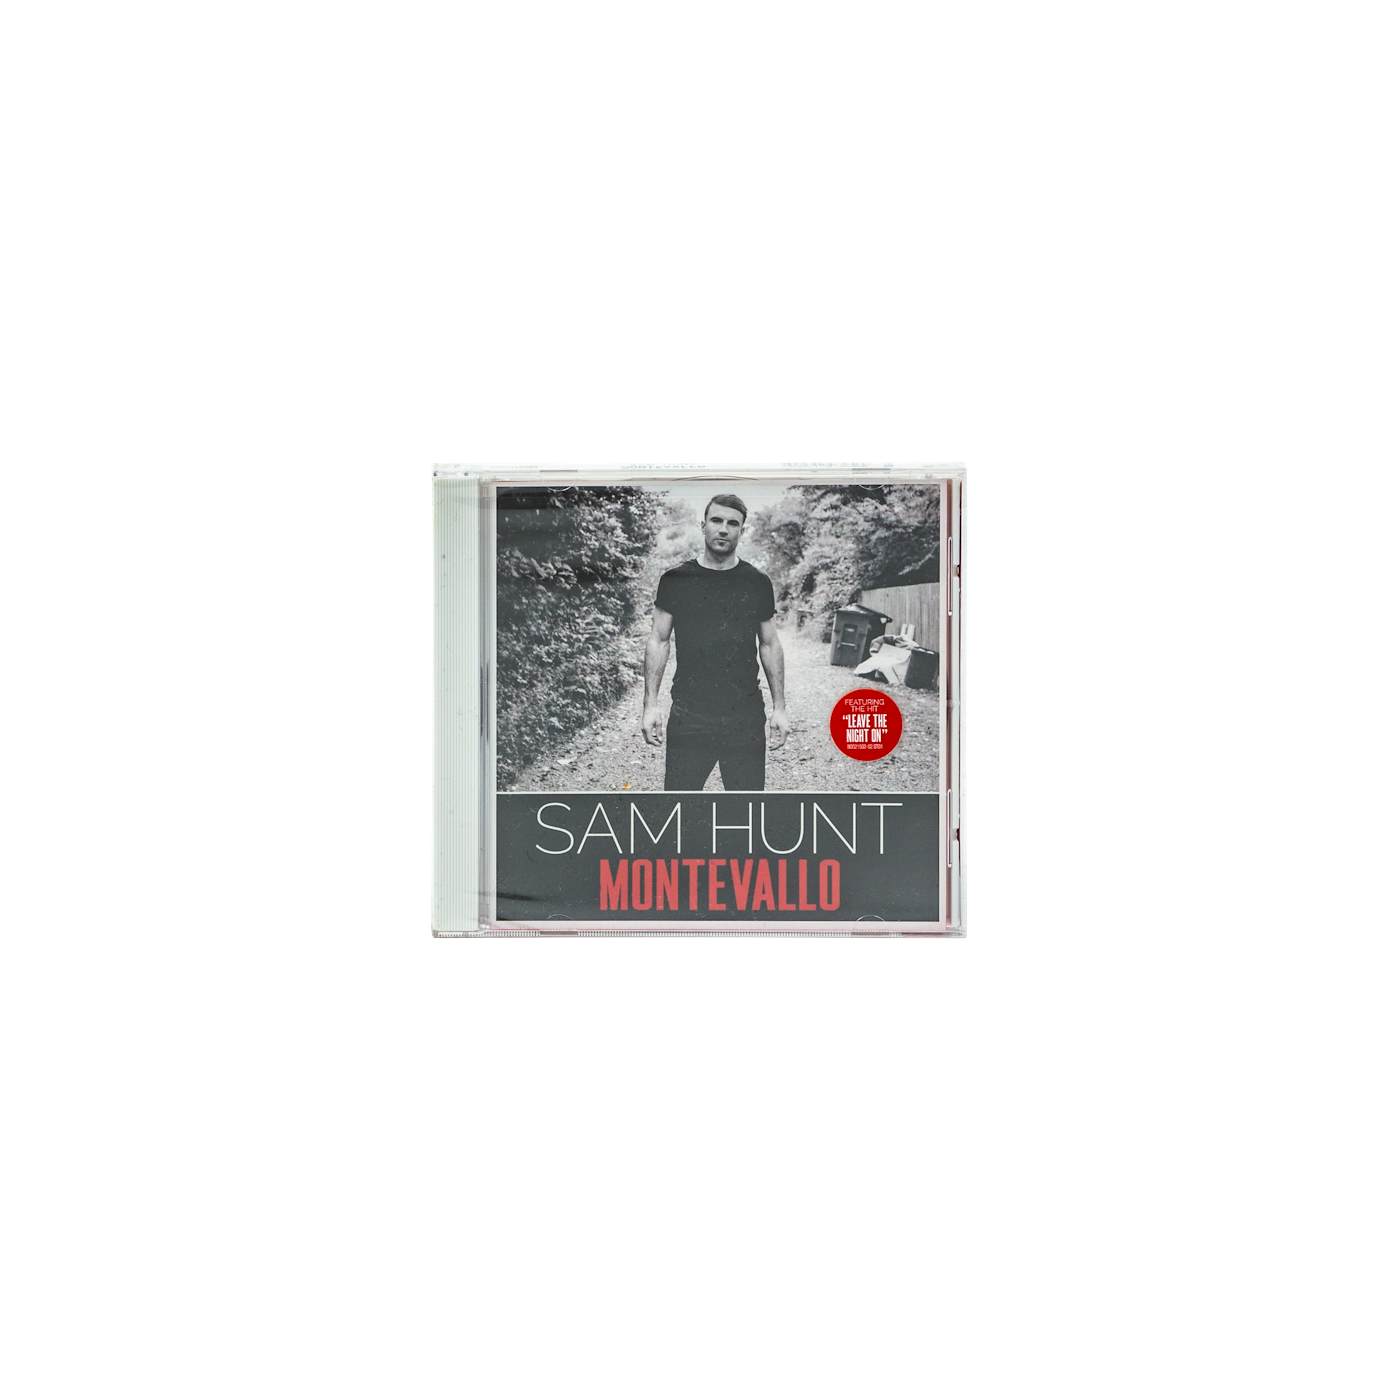 Sam Hunt Montevallo CD